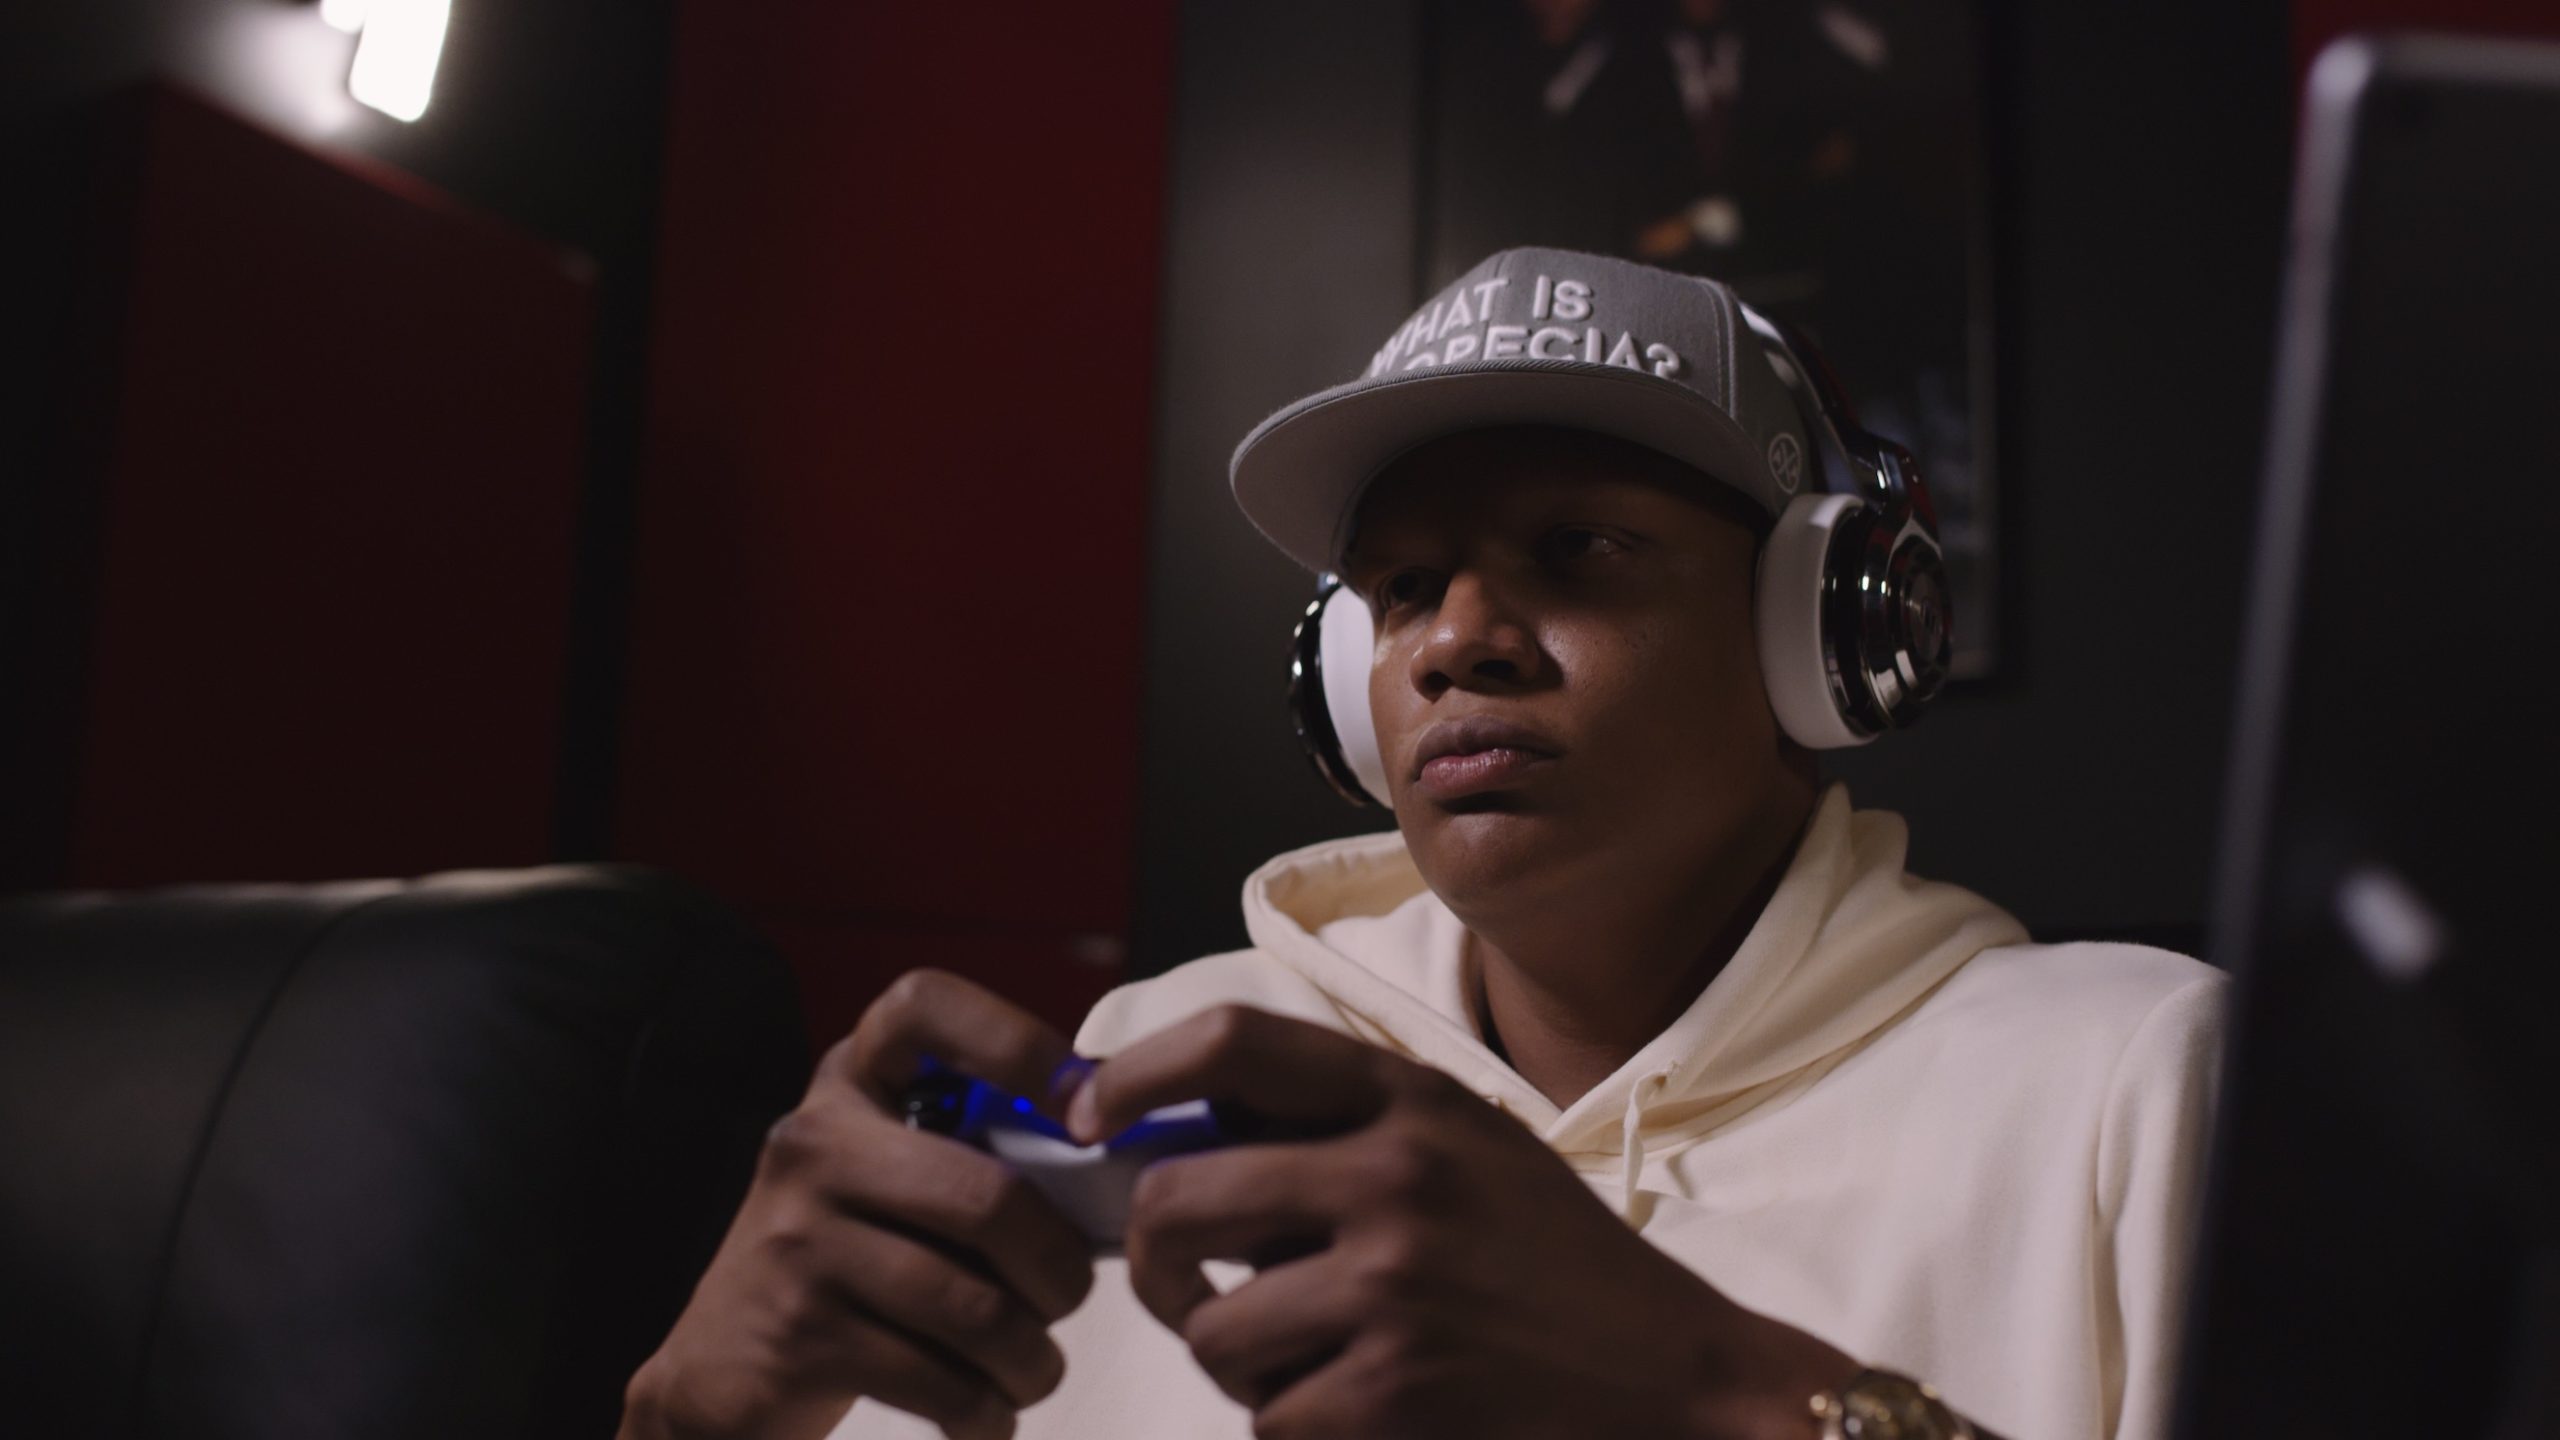 Monster Music Charlie Villanueva African American man wearing headphones and black cap using a video game controller